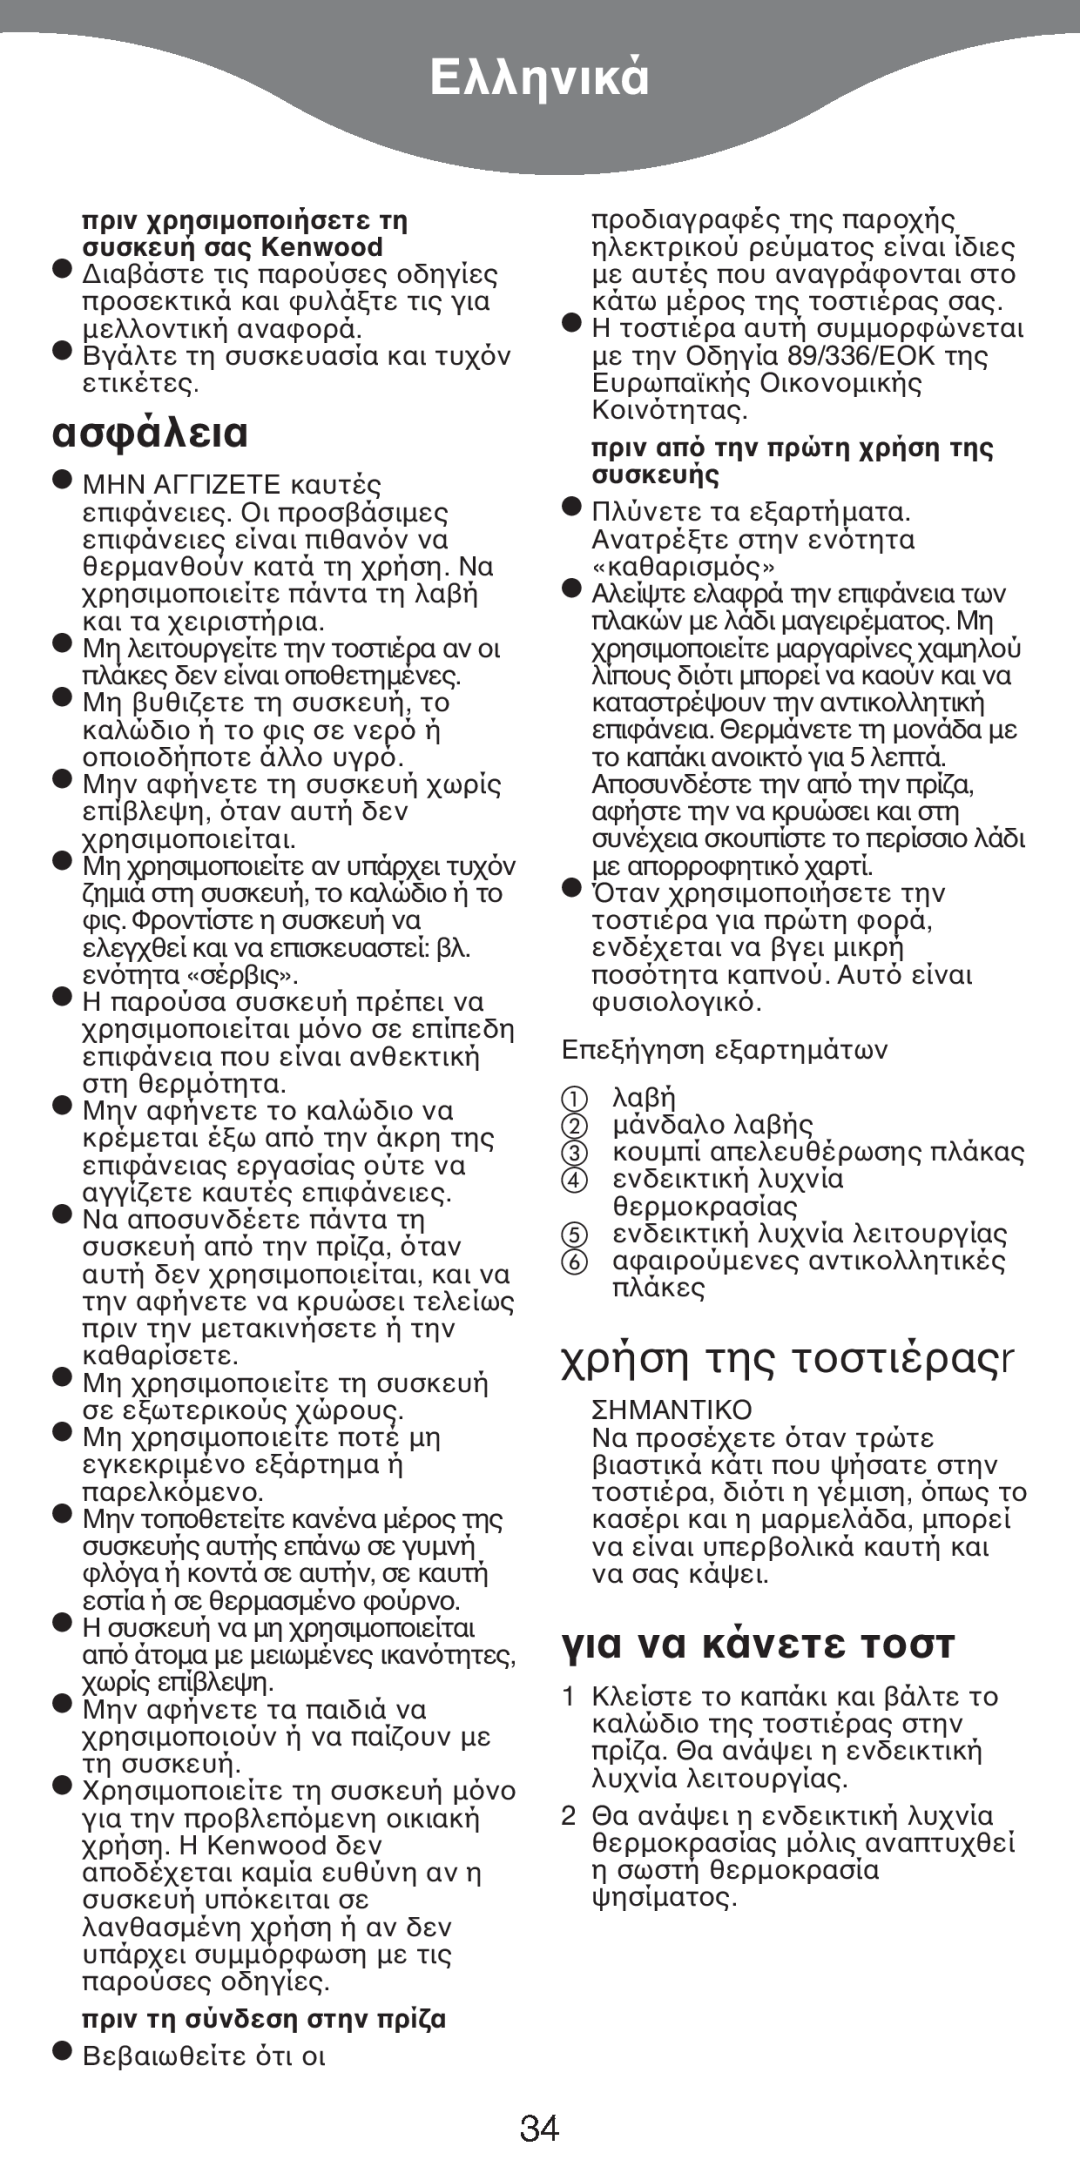 Kenwood SM420 manual Ελληνικά, πριν συσκευή σας Kenwood, πριν τη σύνδεση στην πρί, πριν απ συσκευής, για να κάνετε τ 